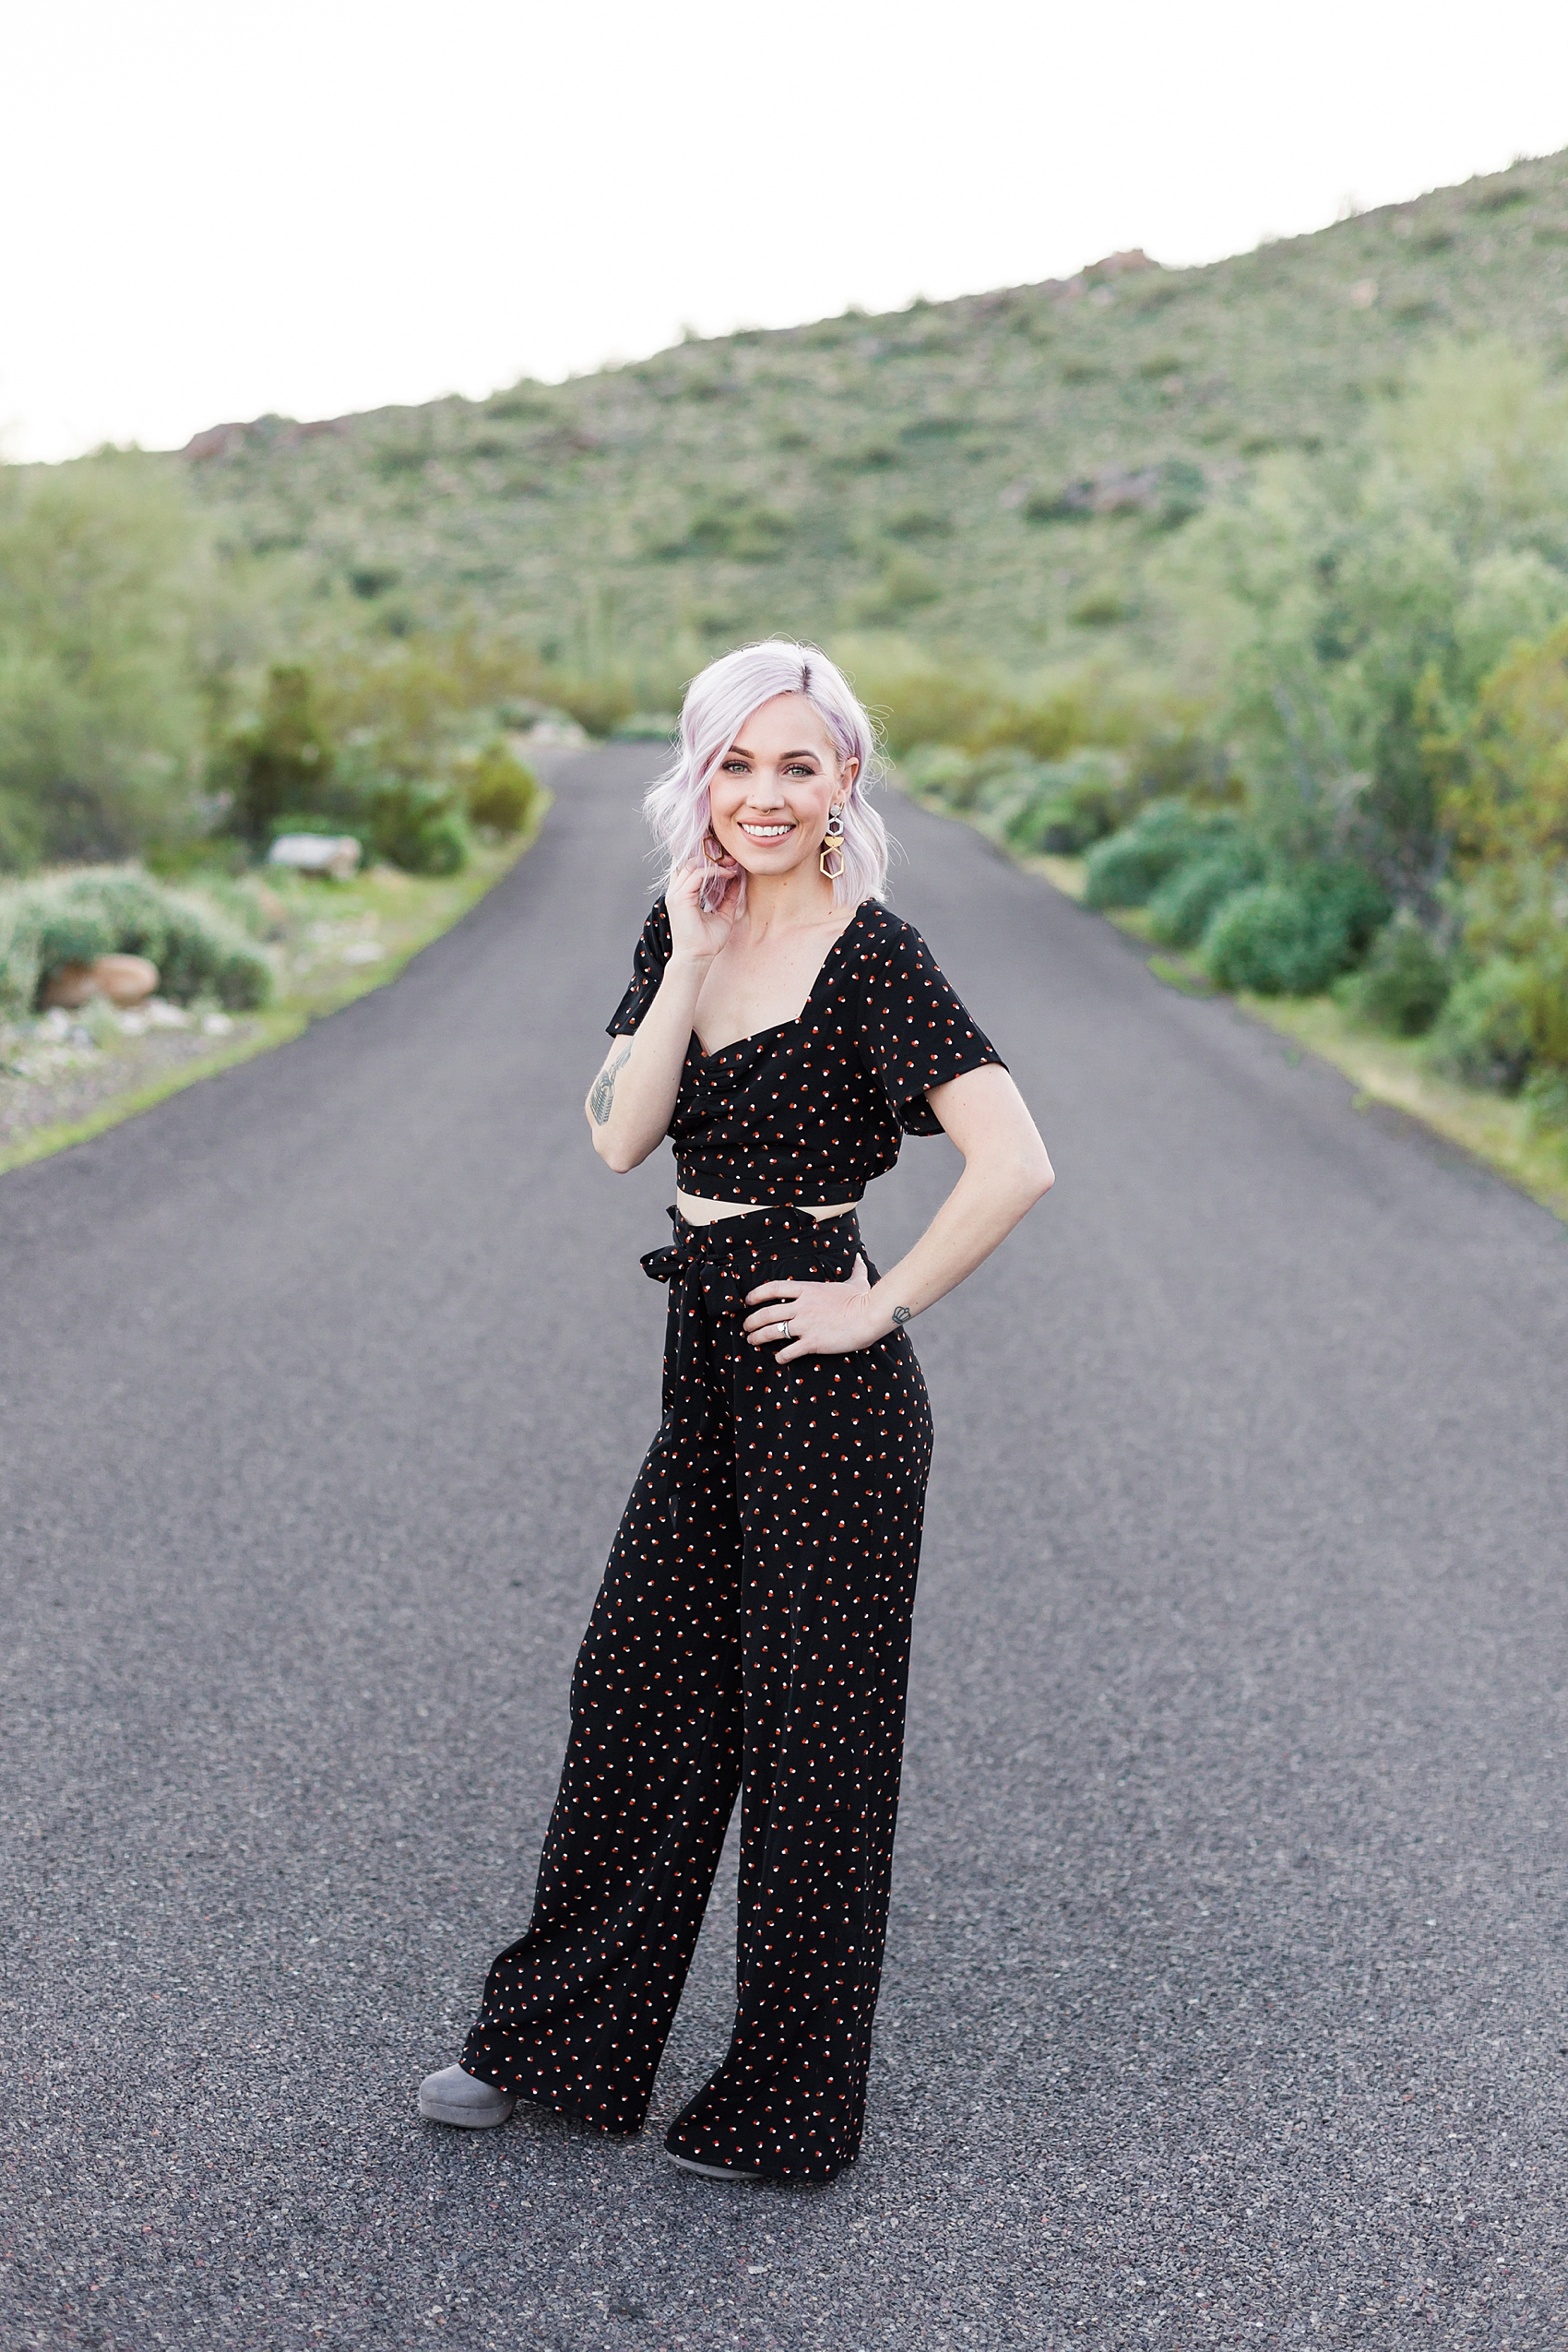 Leah Hope Photography | Scottsdale Phoenix Arizona | Desert Landscape Cactus Scenery | White Tank Mountains Regional Park | Fashion Blogger | Model Pictures | What to Wear Women | Female Portraits 